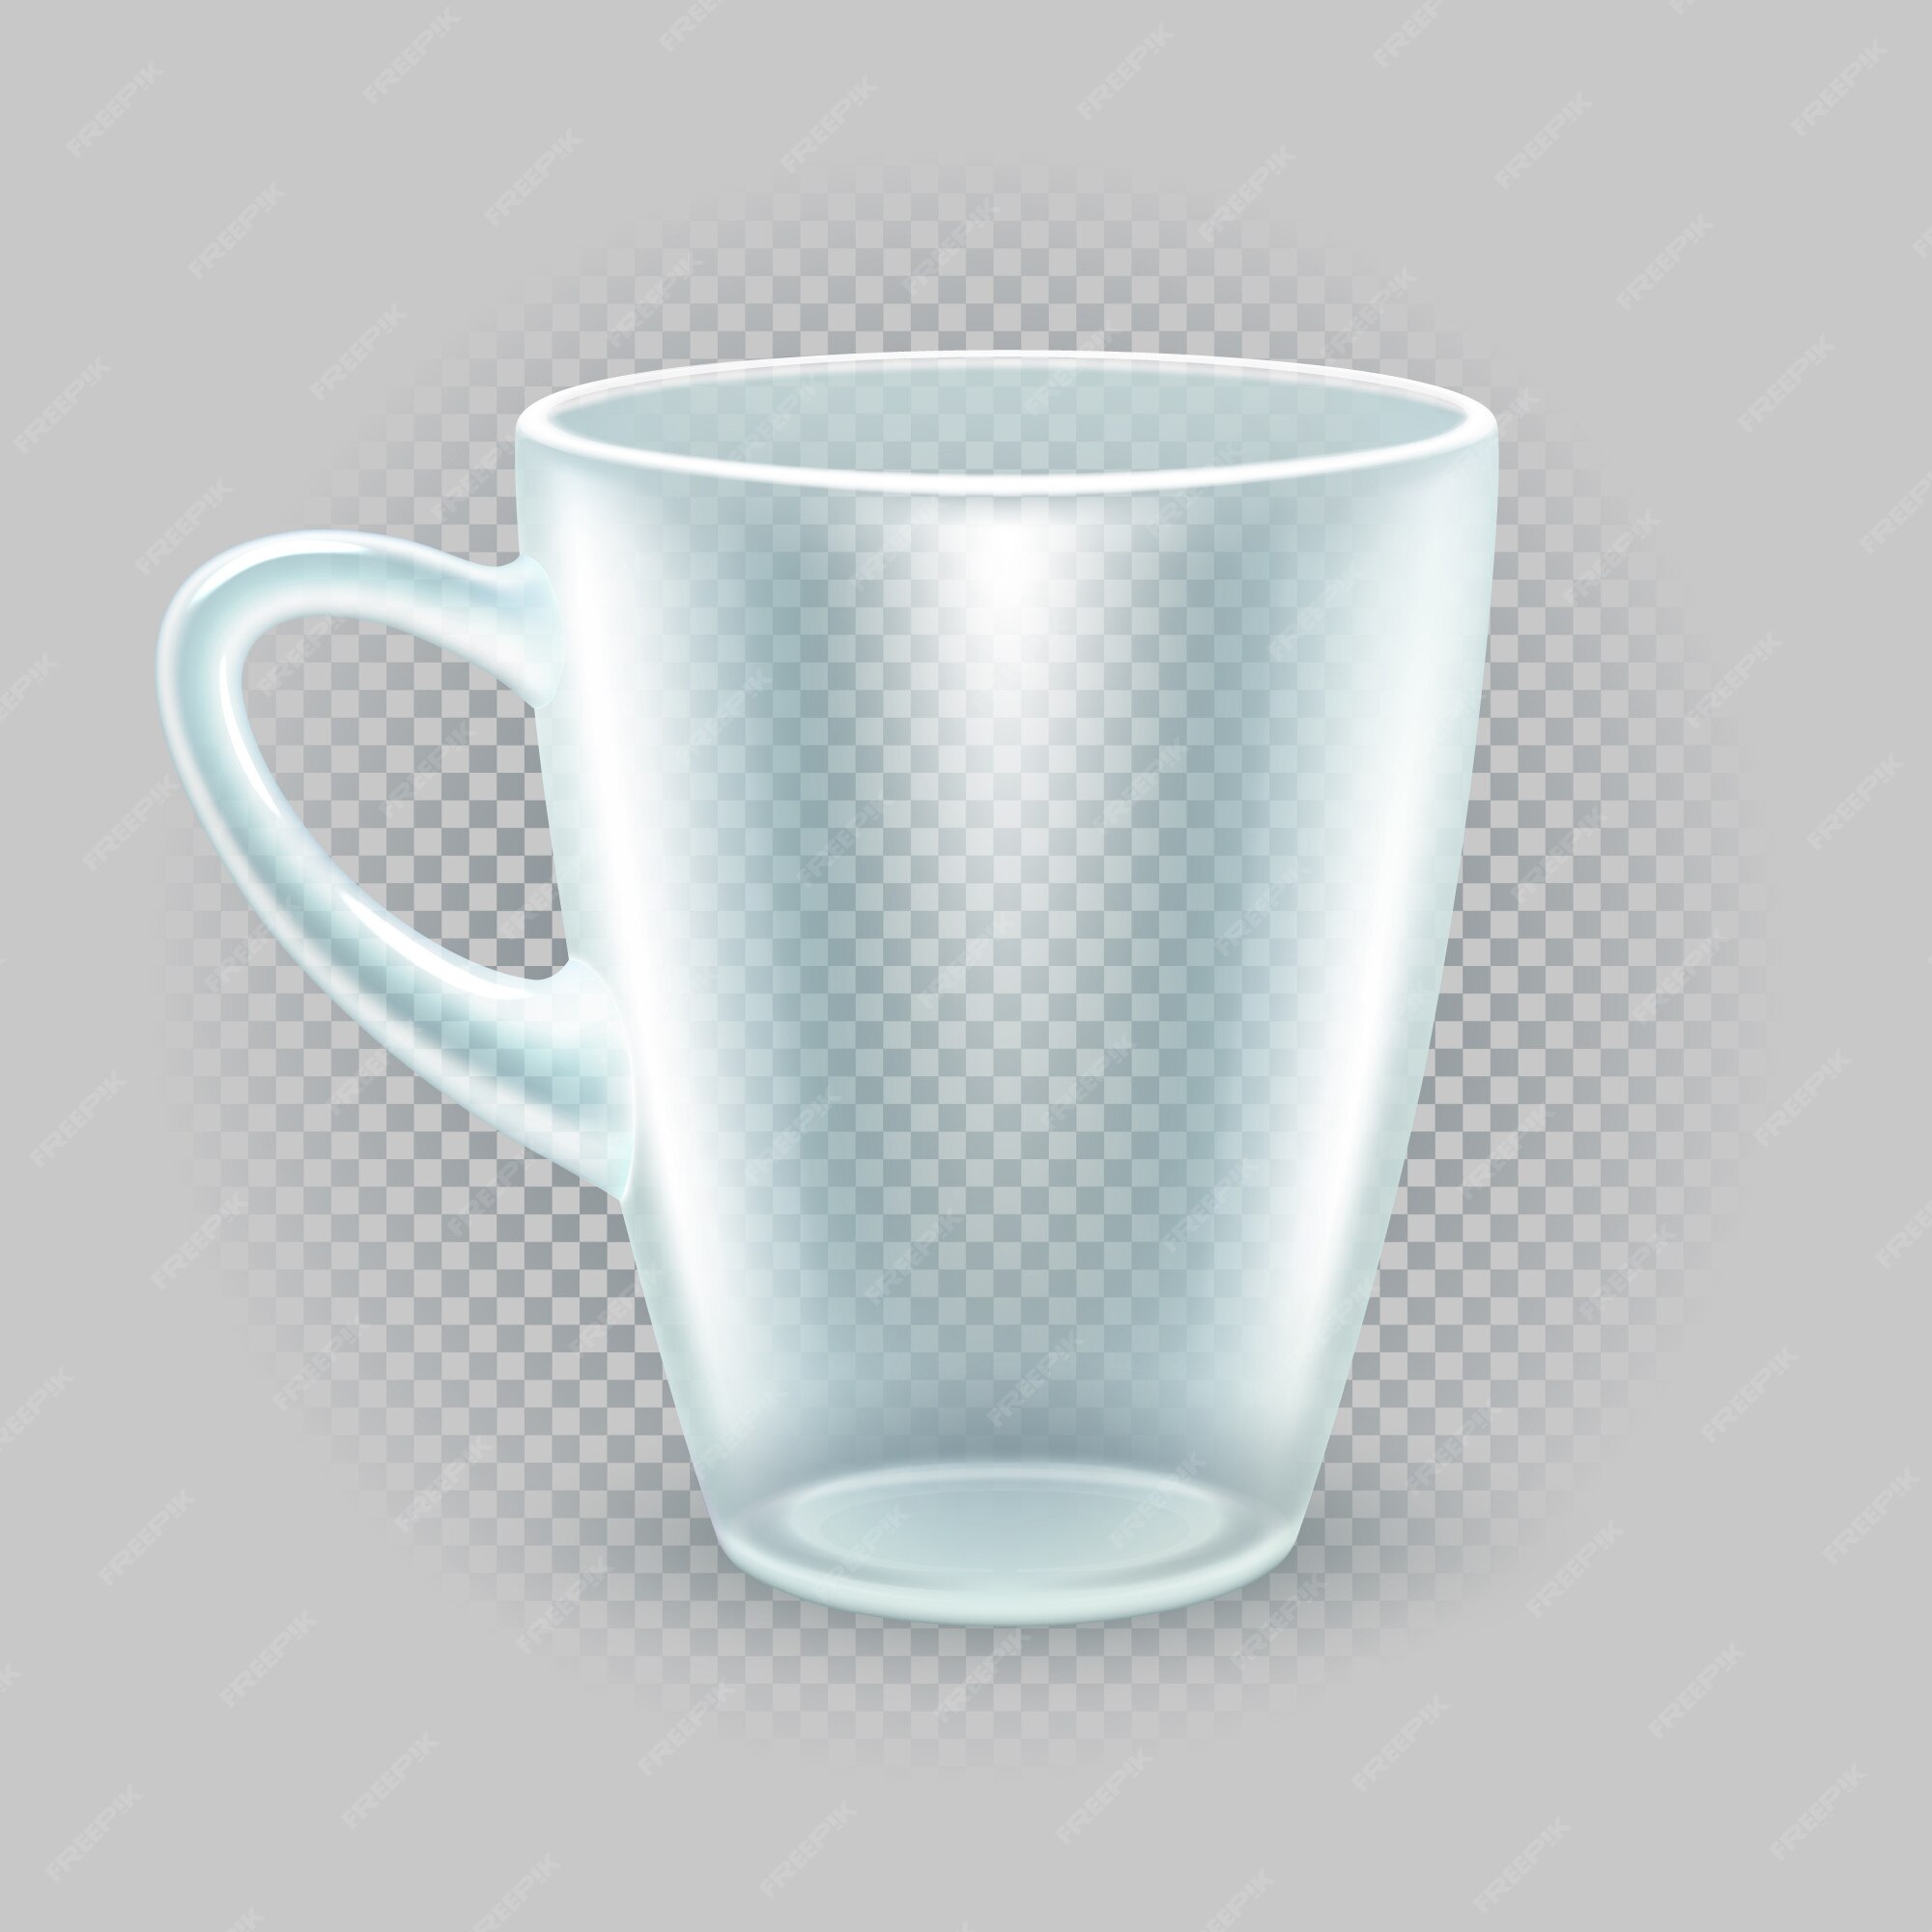 Premium Vector  White mug on transparent background. illustration.